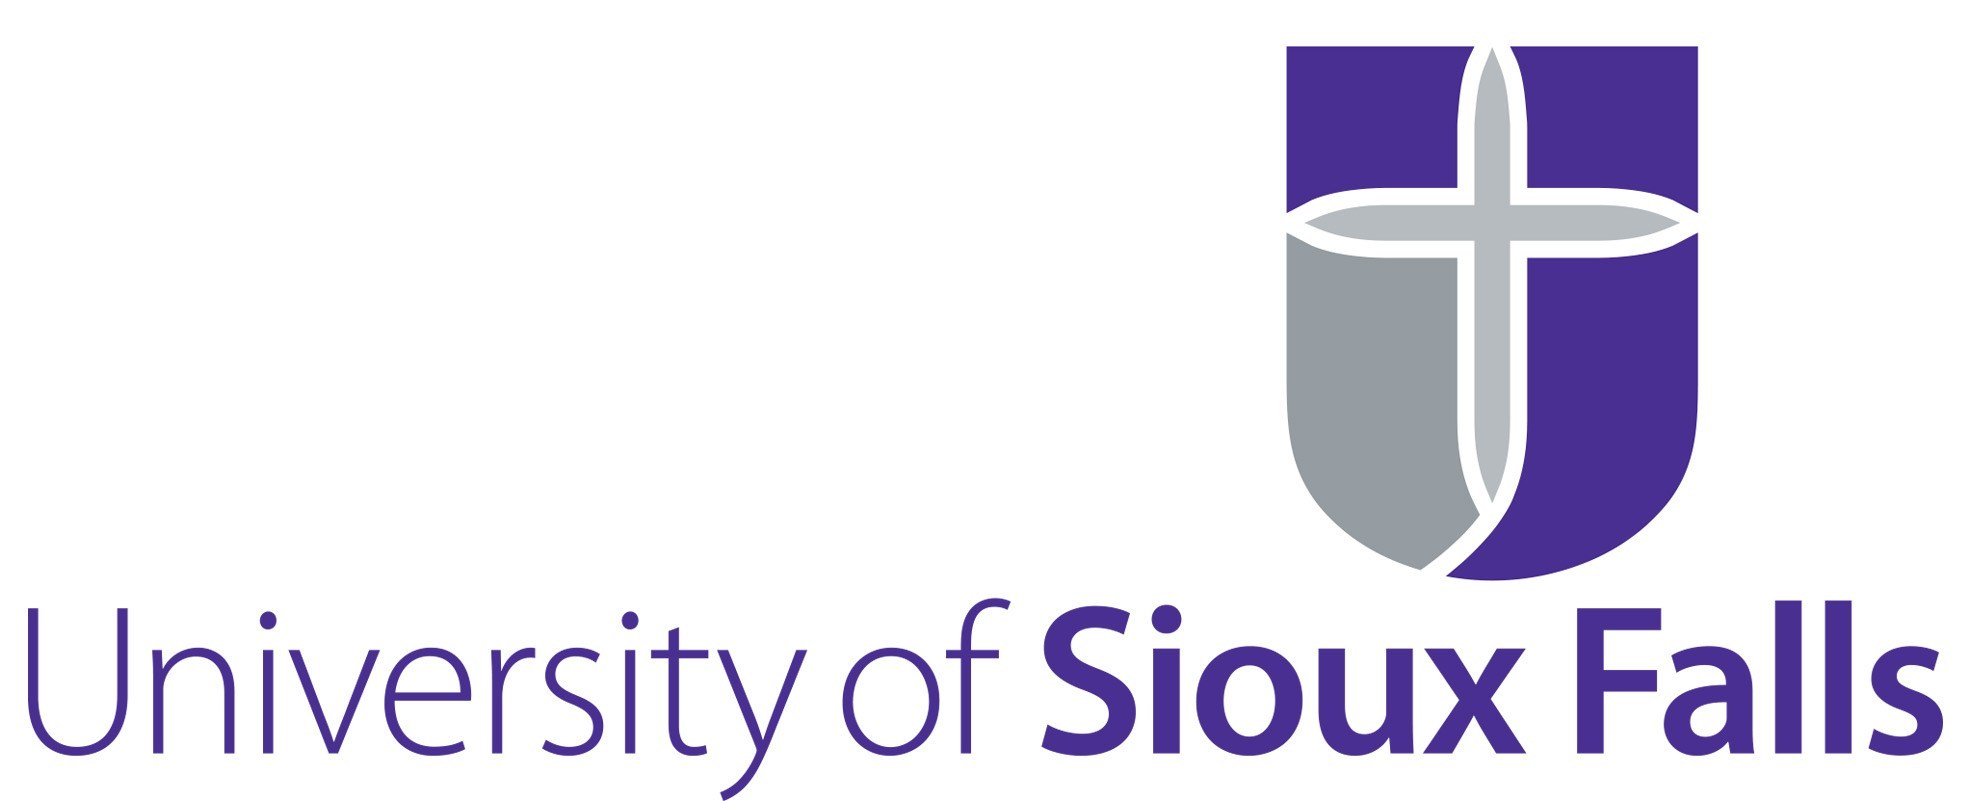 University of sioux falls job openings